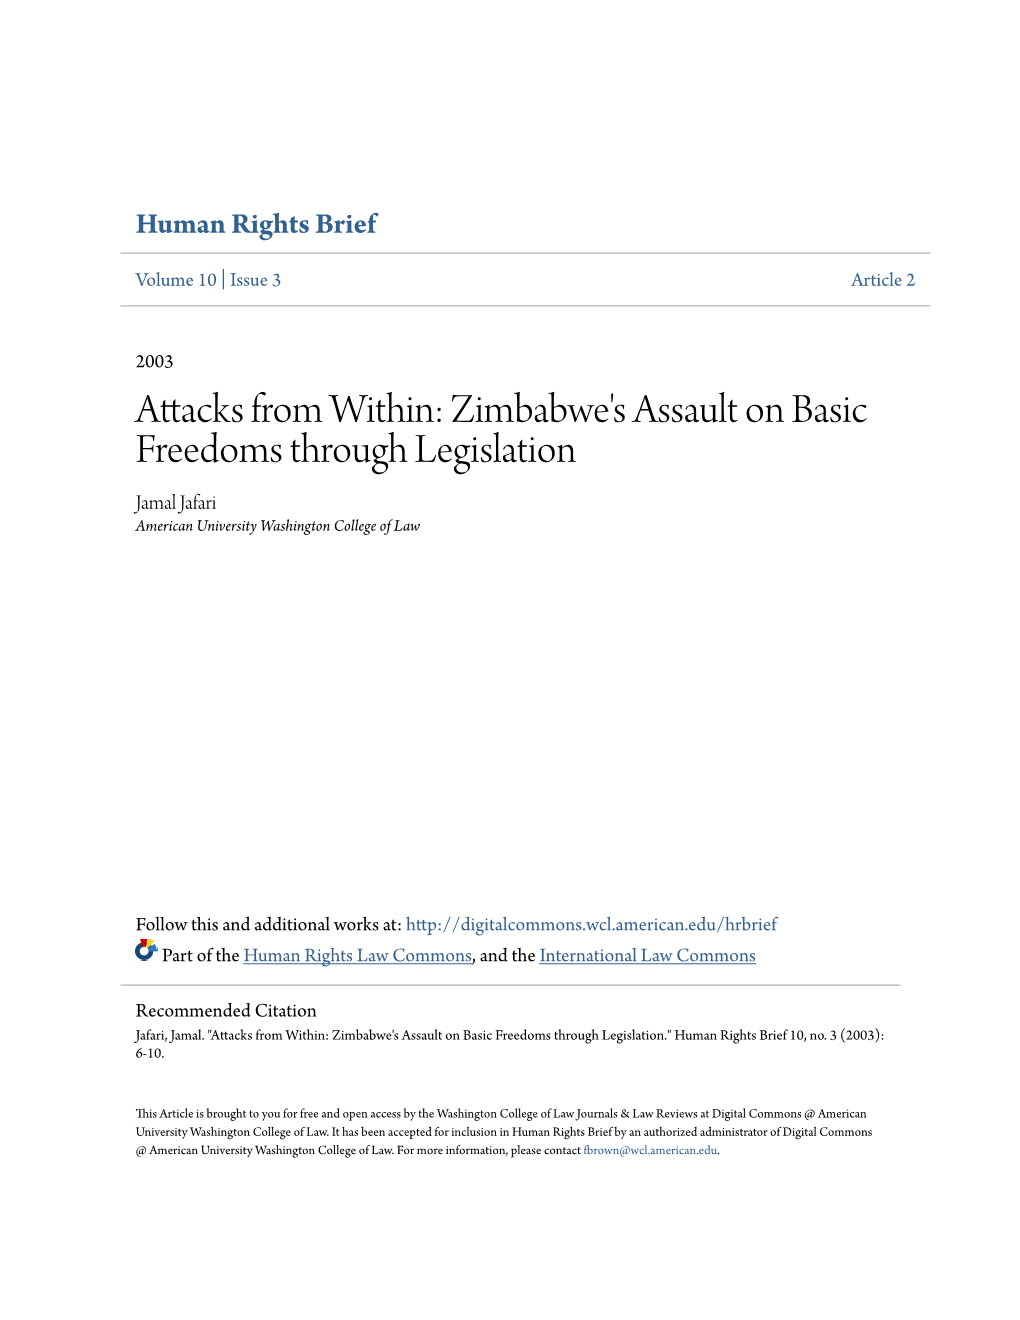 Zimbabwe's Assault on Basic Freedoms Through Legislation Jamal Jafari American University Washington College of Law